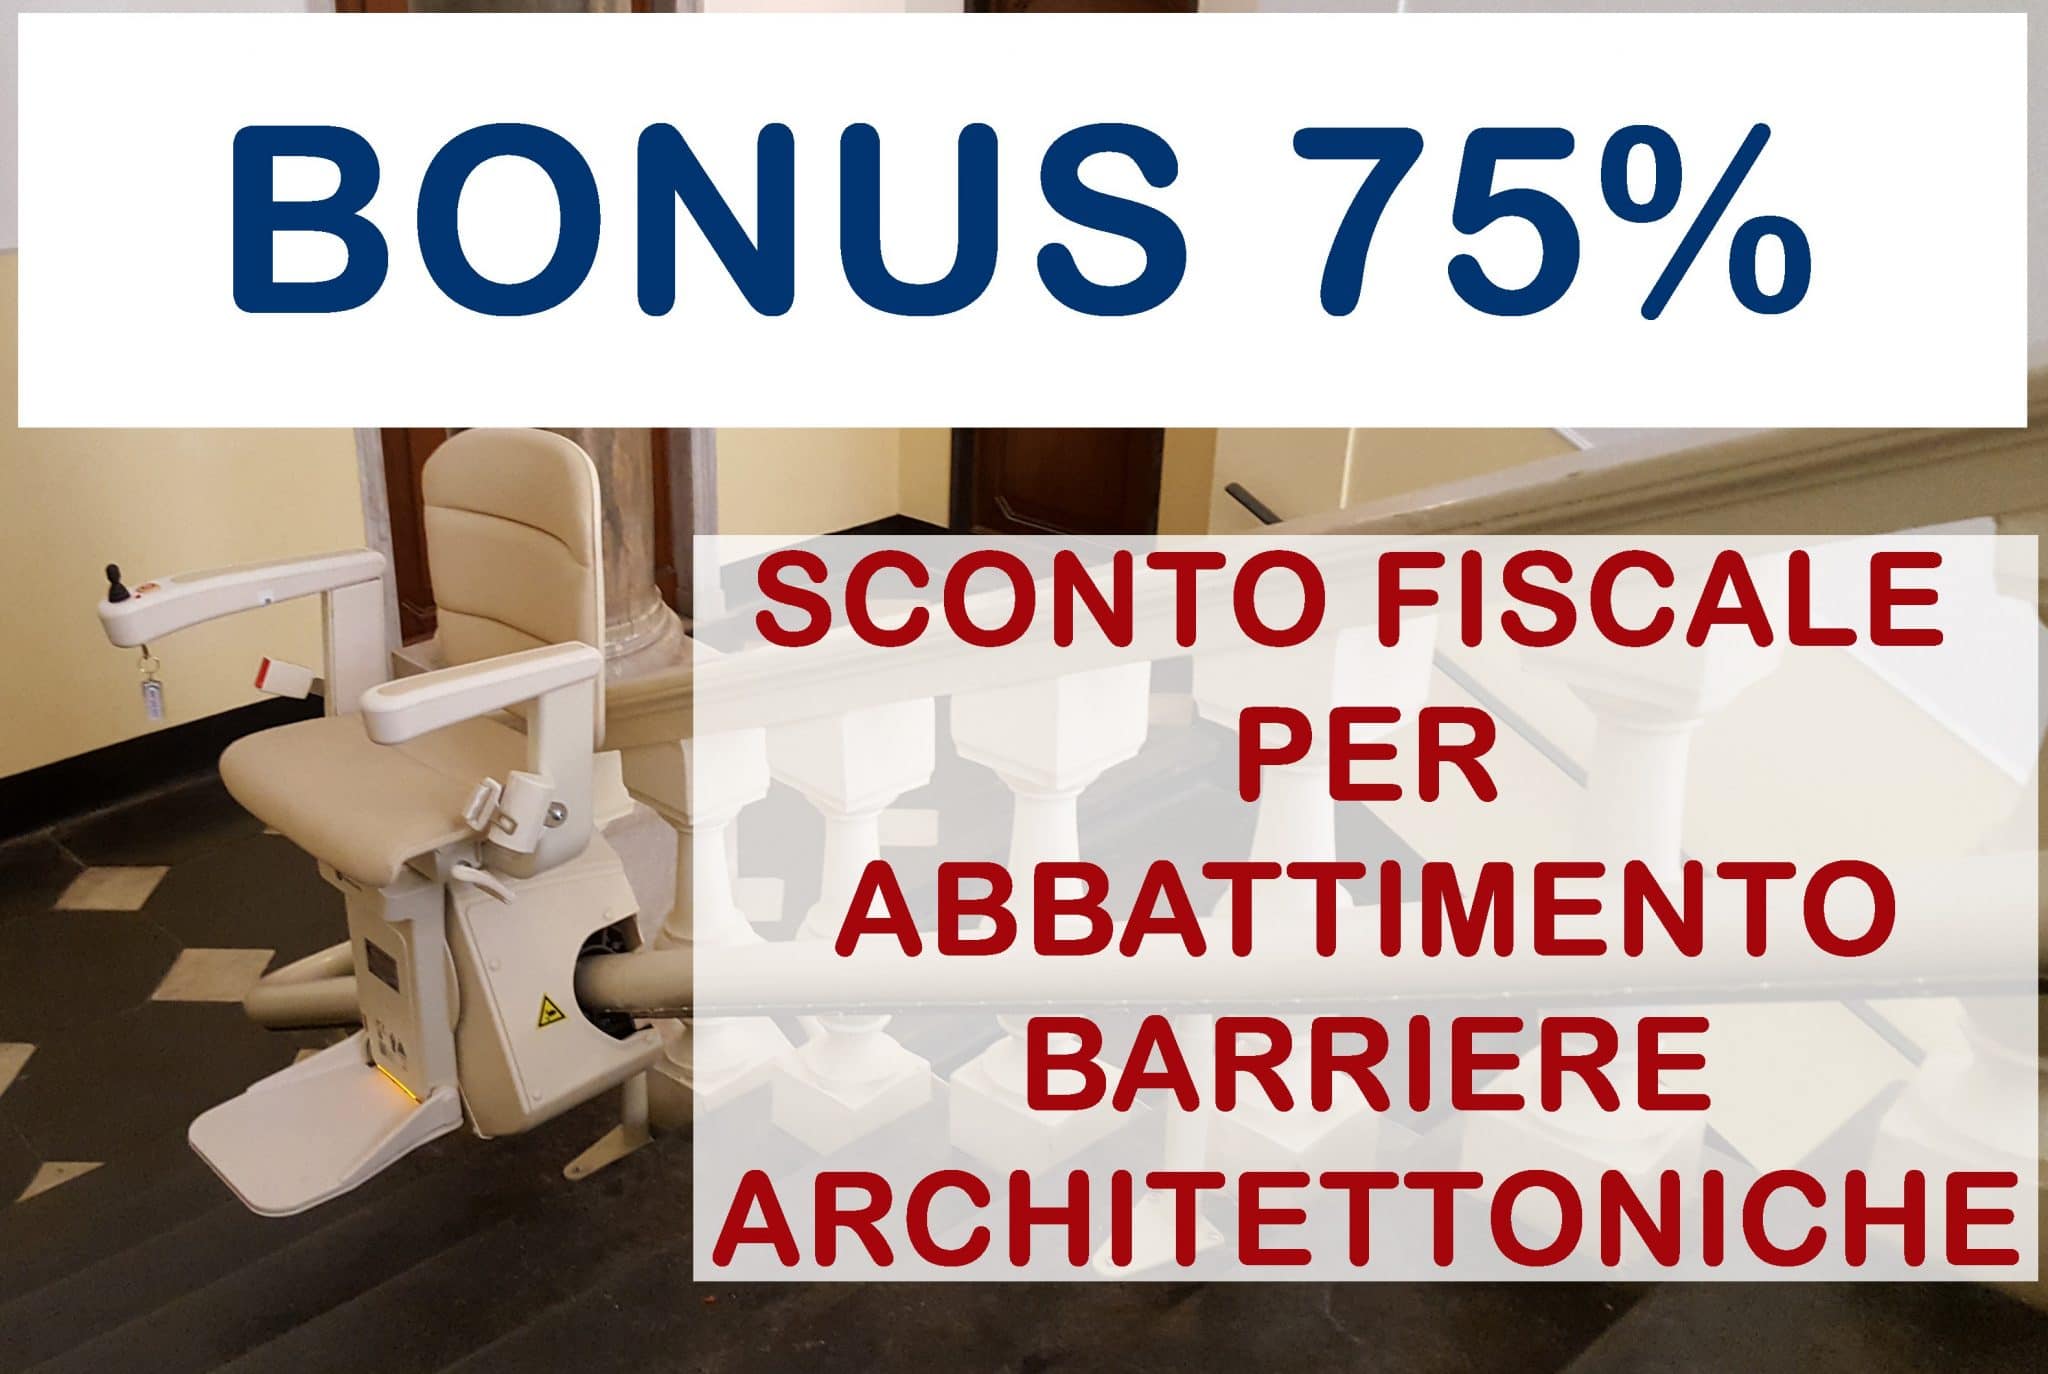 Bonus barriere architettoniche 75%